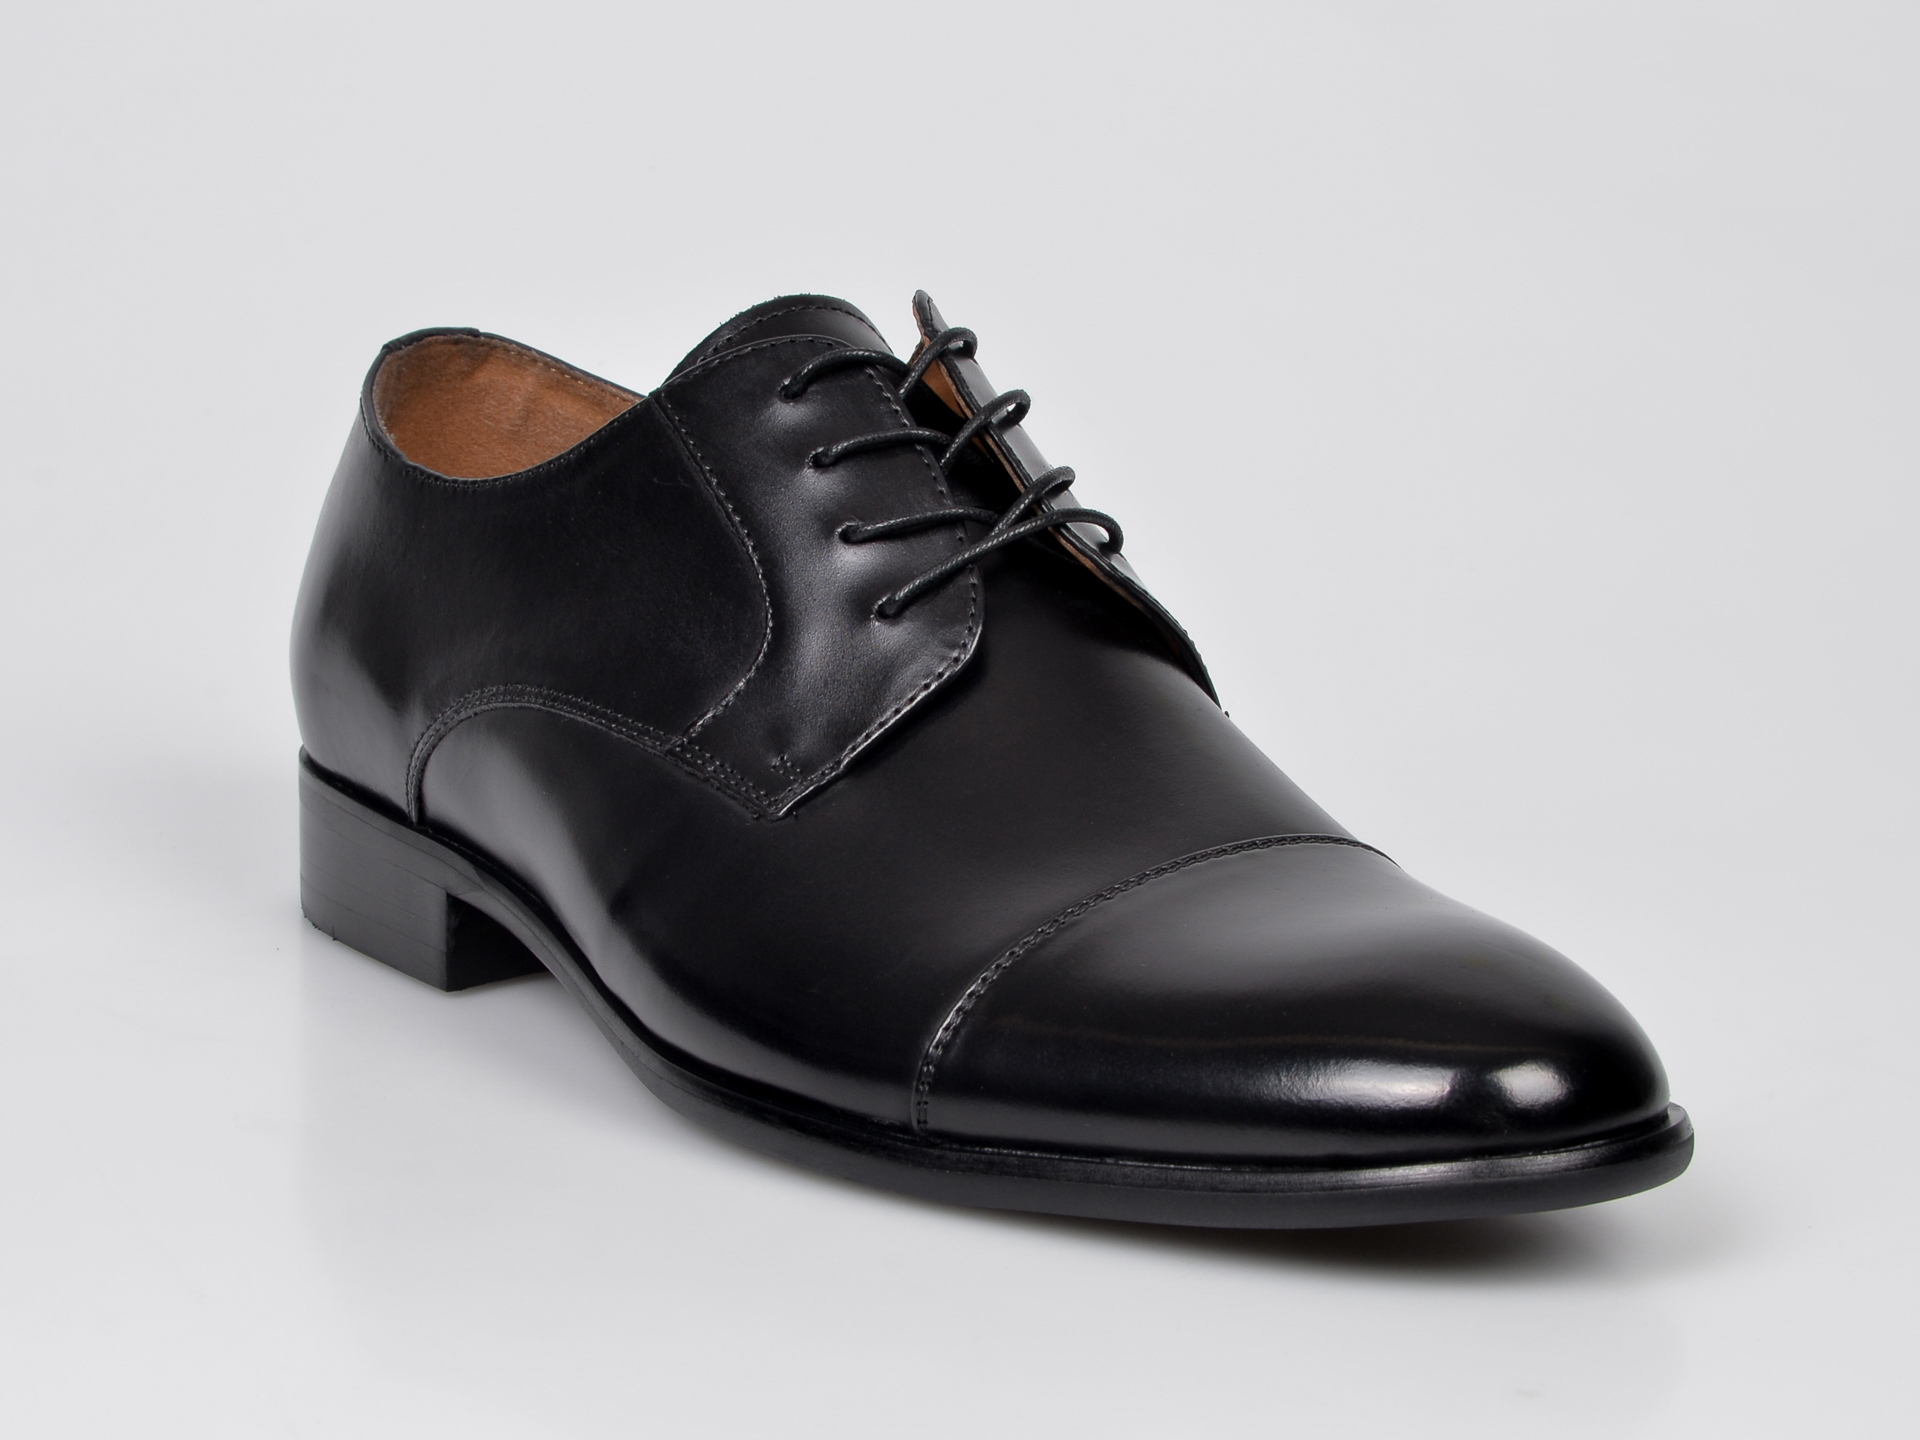 Pantofi ALDO negri, Gallerang-R, din piele naturala